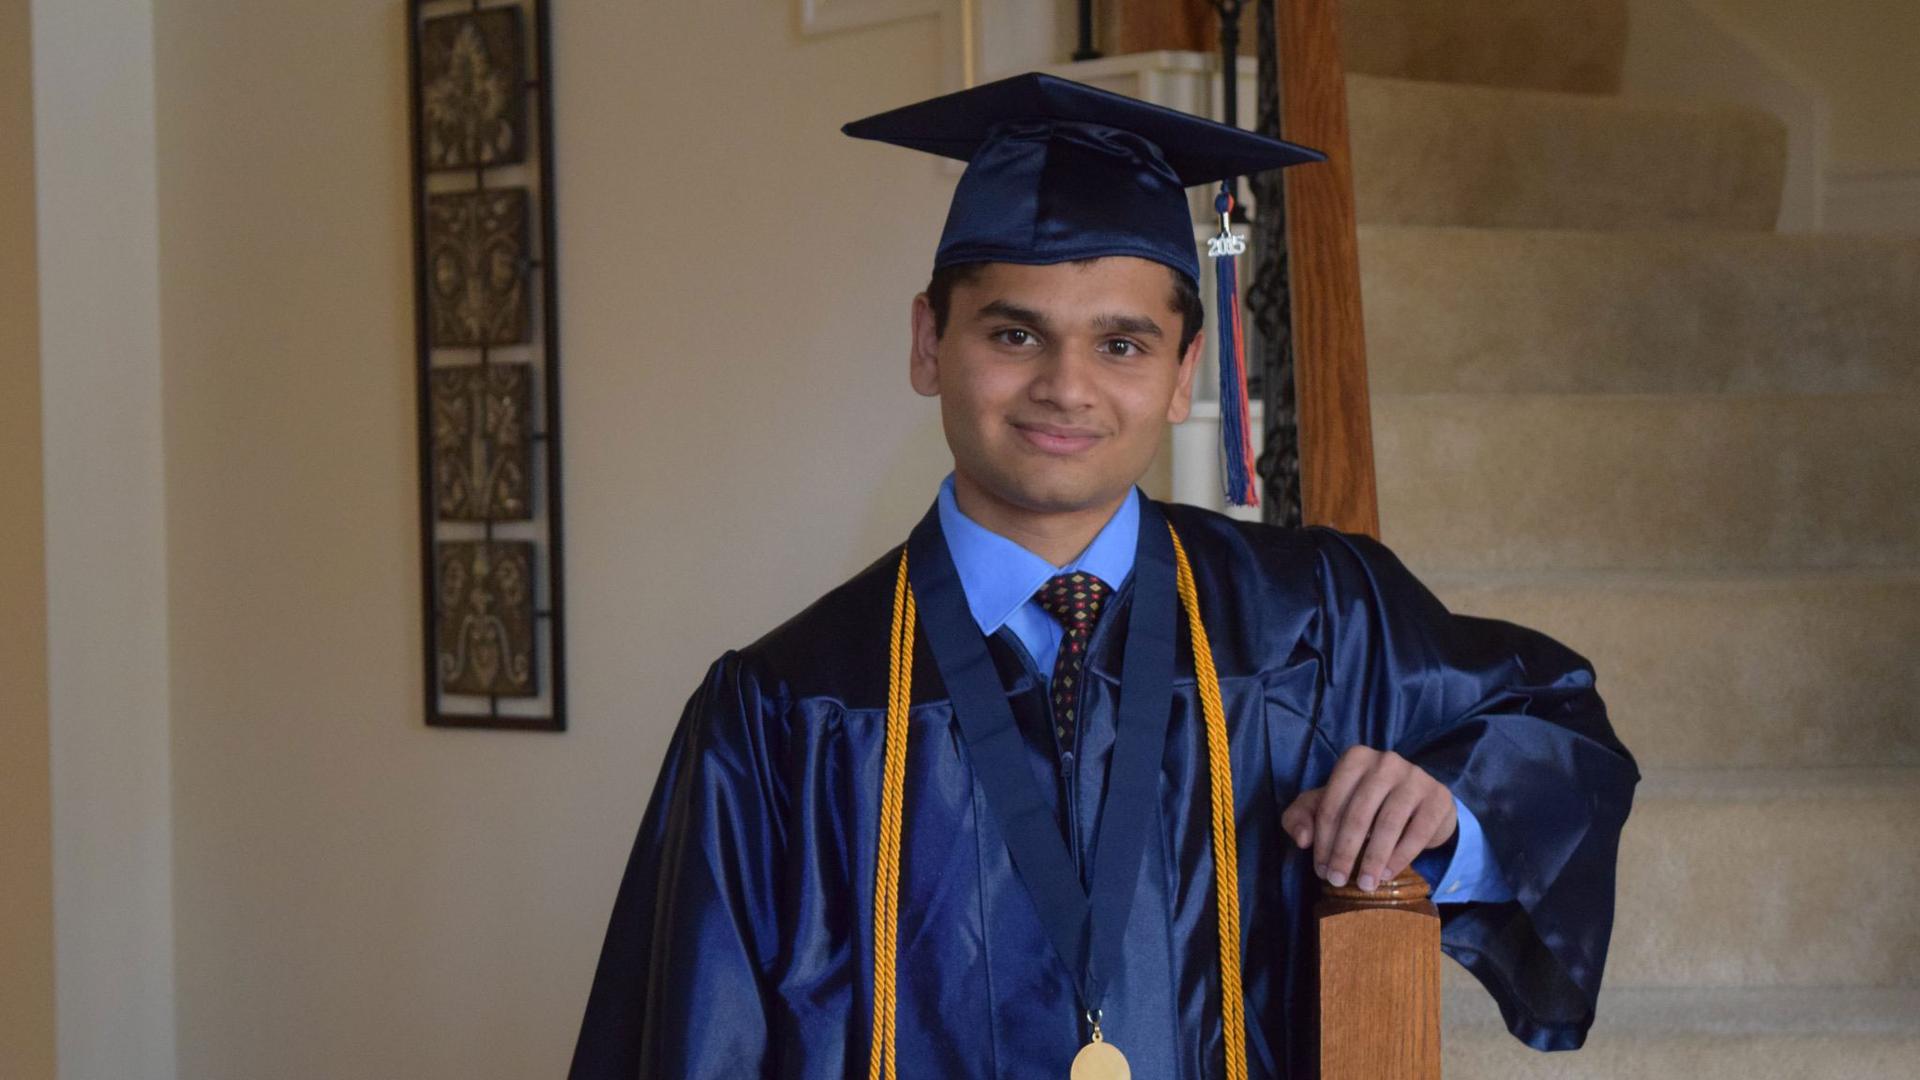 Animesh Namjoshi poses for a graduation photo after receiving his diploma at Seven Lakes High School